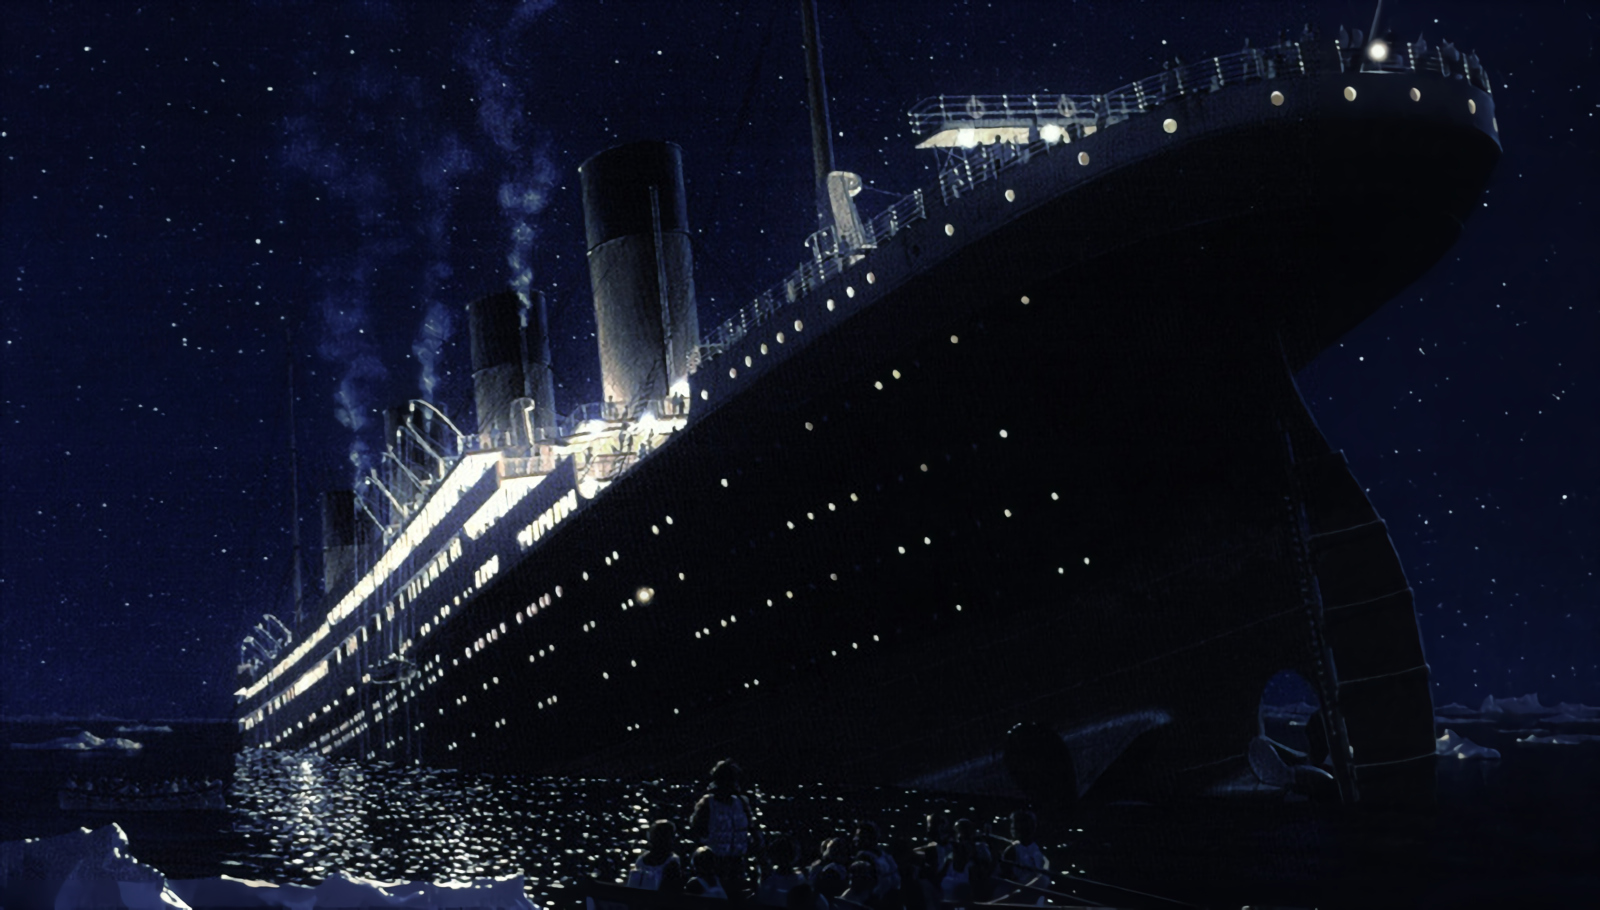 Titanic Sinking (Wallpaper 3) by Stephen-Fisher on DeviantArt